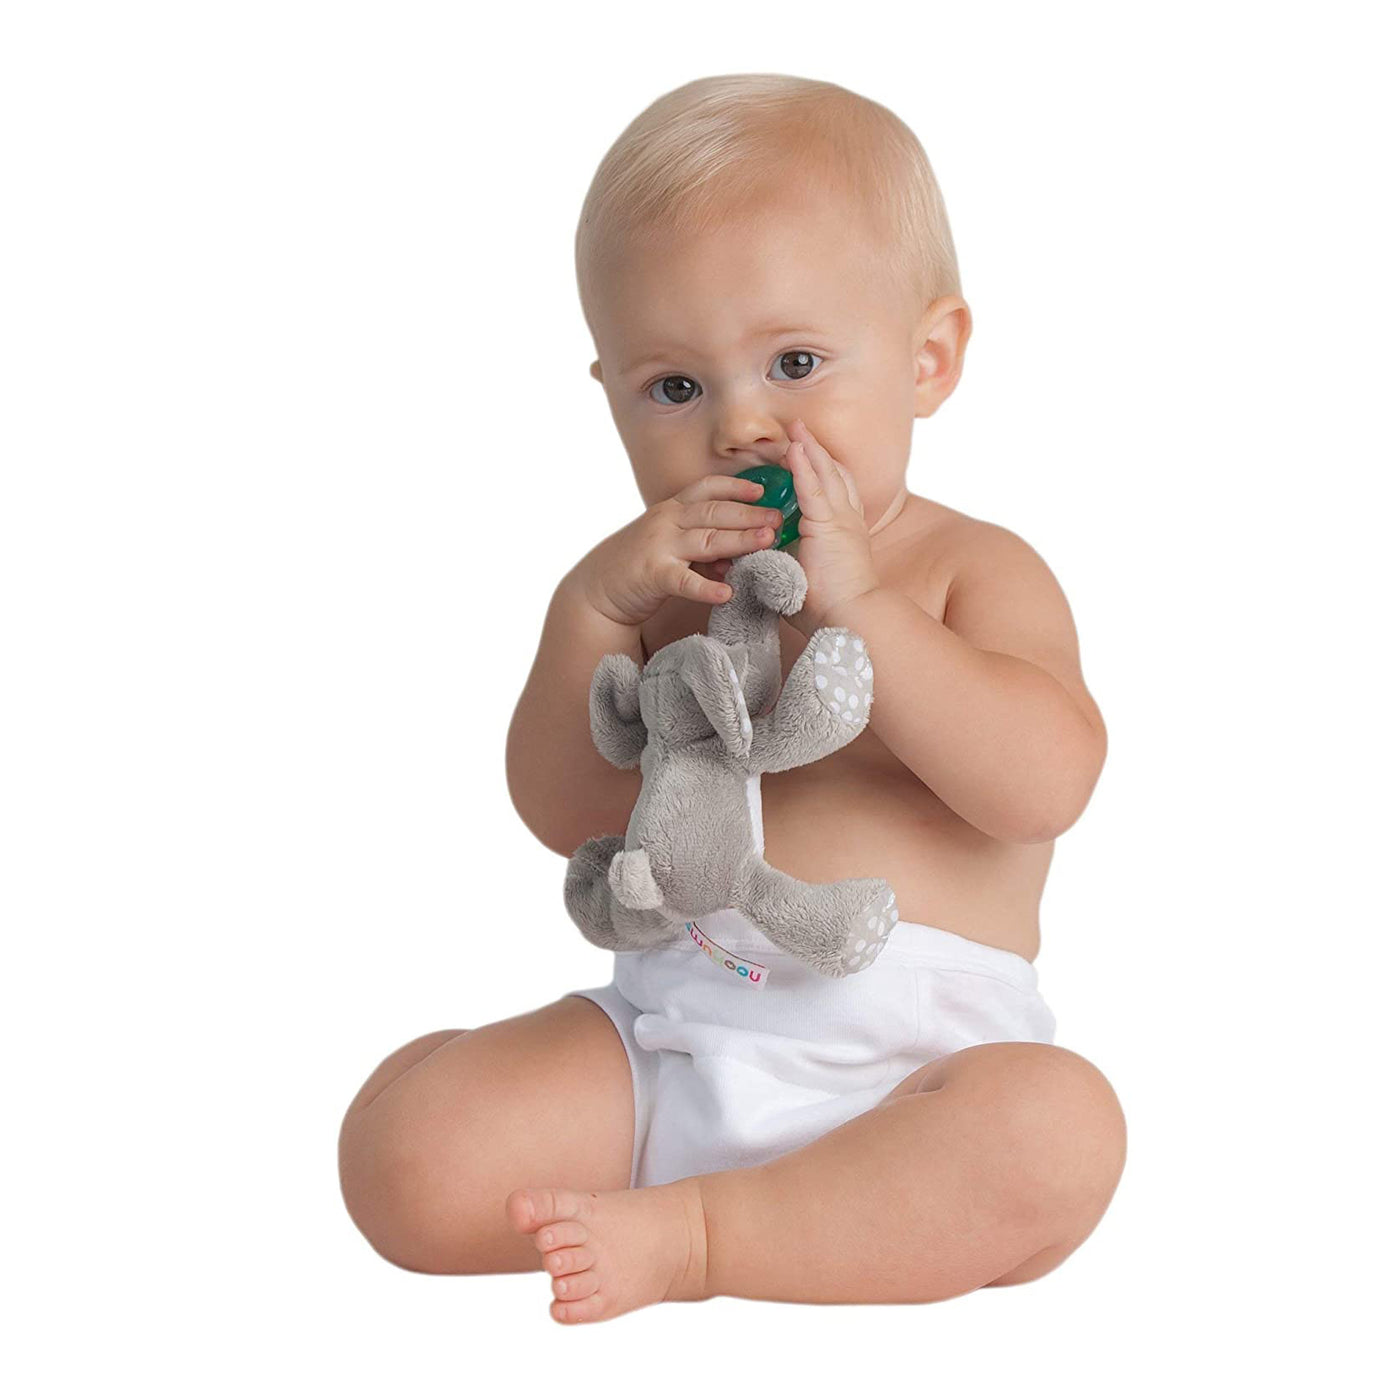 Nookums Paci-Plushies Buddies - Elephant Pacifier Holder - Plush Toy Includes Detachable Pacifier - Little Kooma